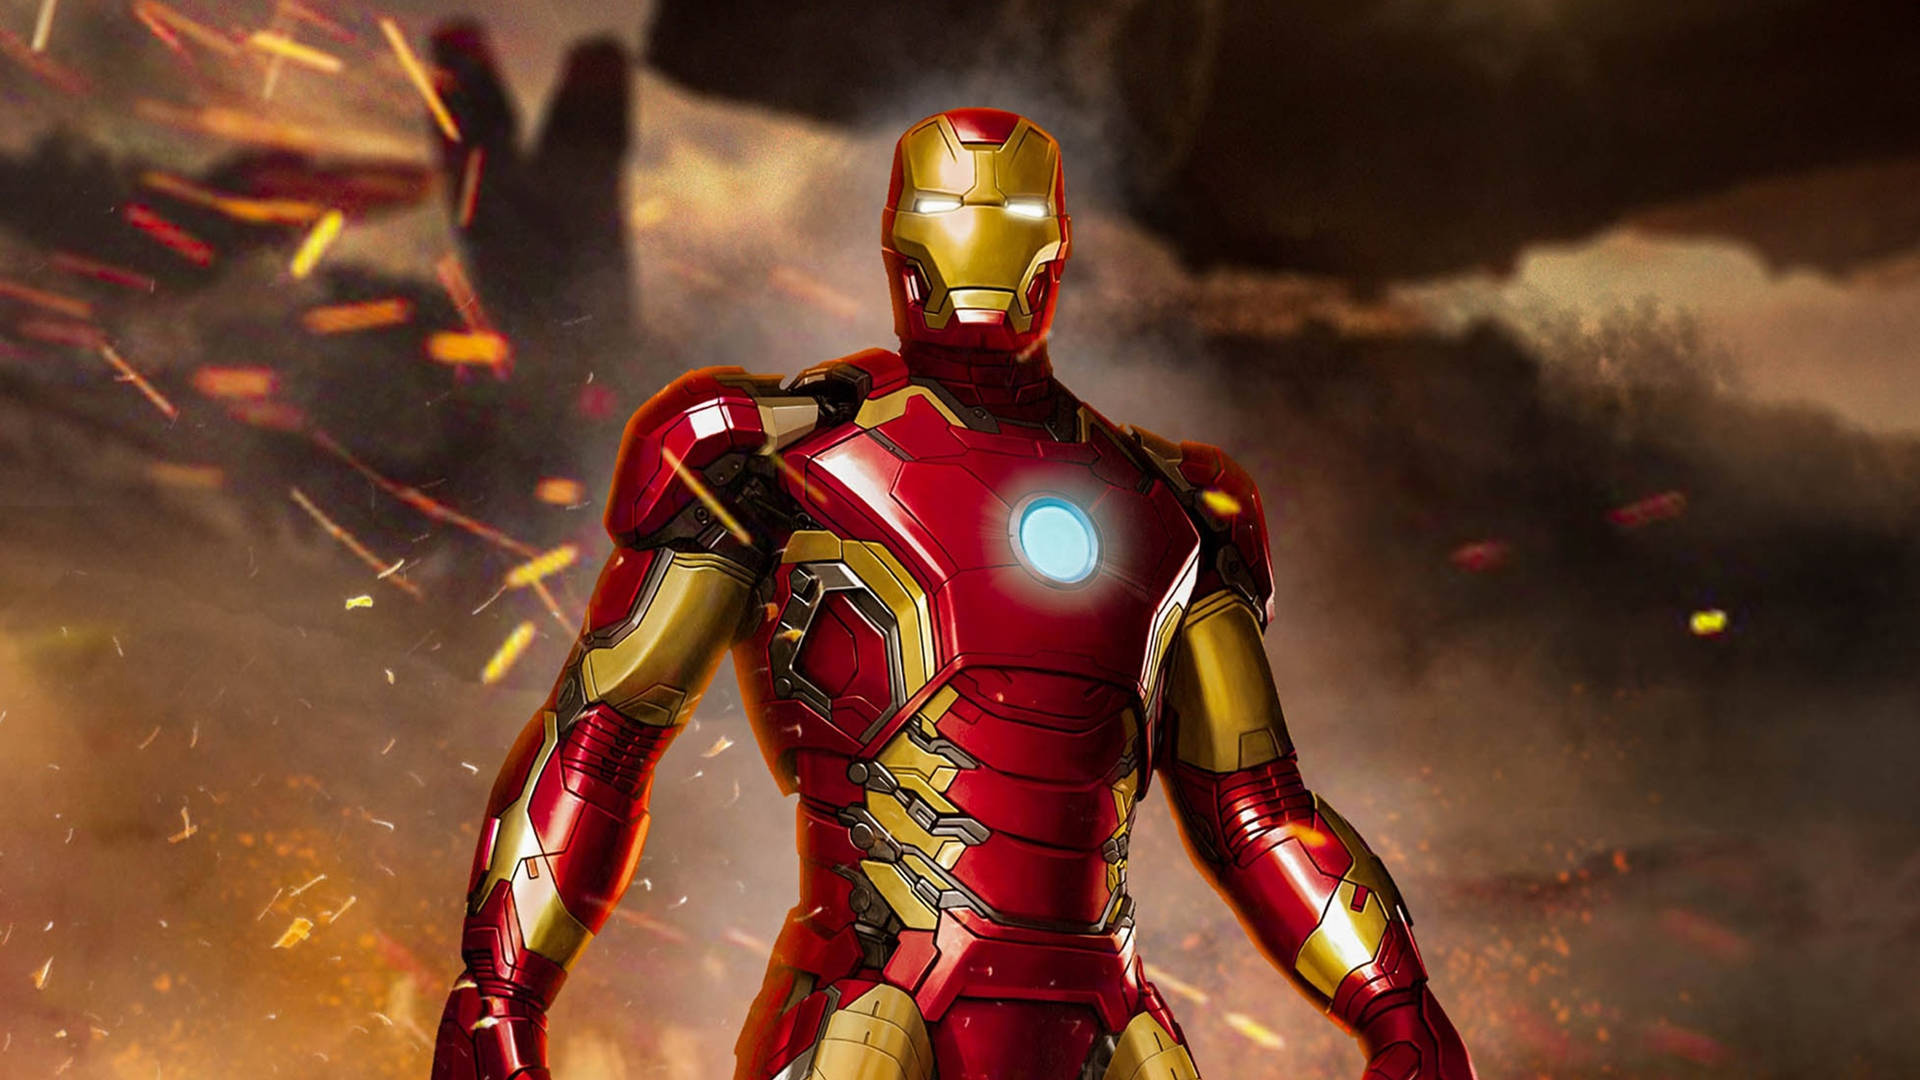 Cenizasardientes Iron Man Superhéroe Fondo de pantalla